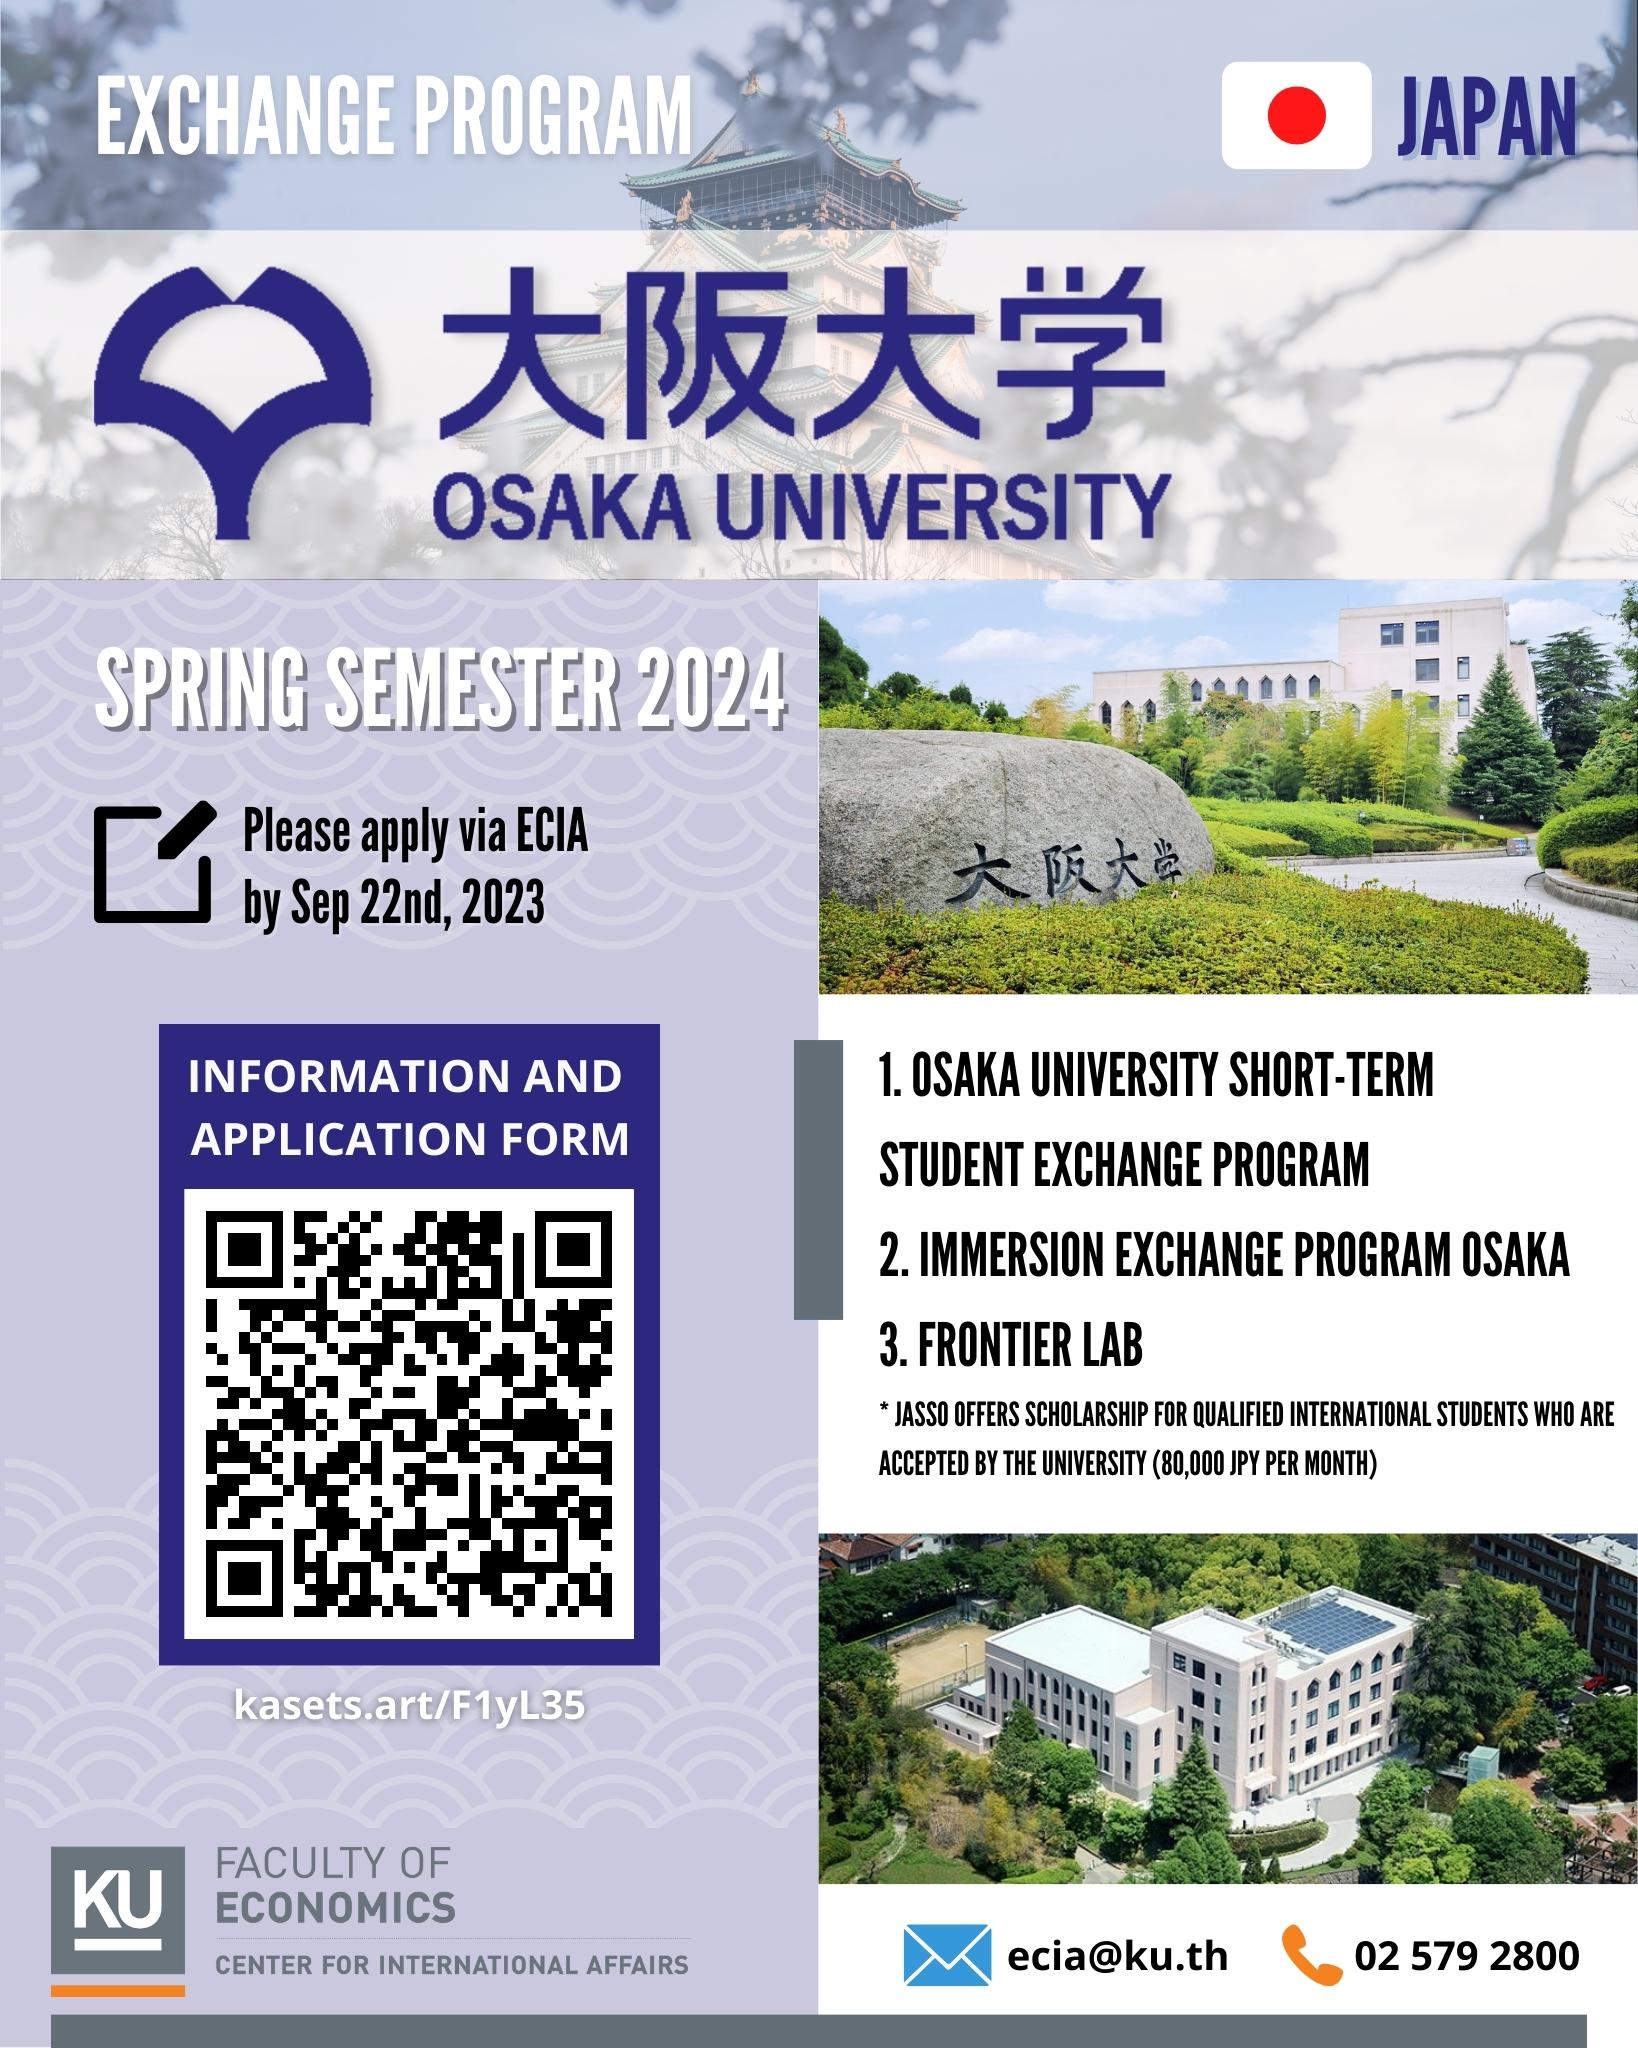 [Exchange Program] OSAKA University, Japan Spring Semester 2024